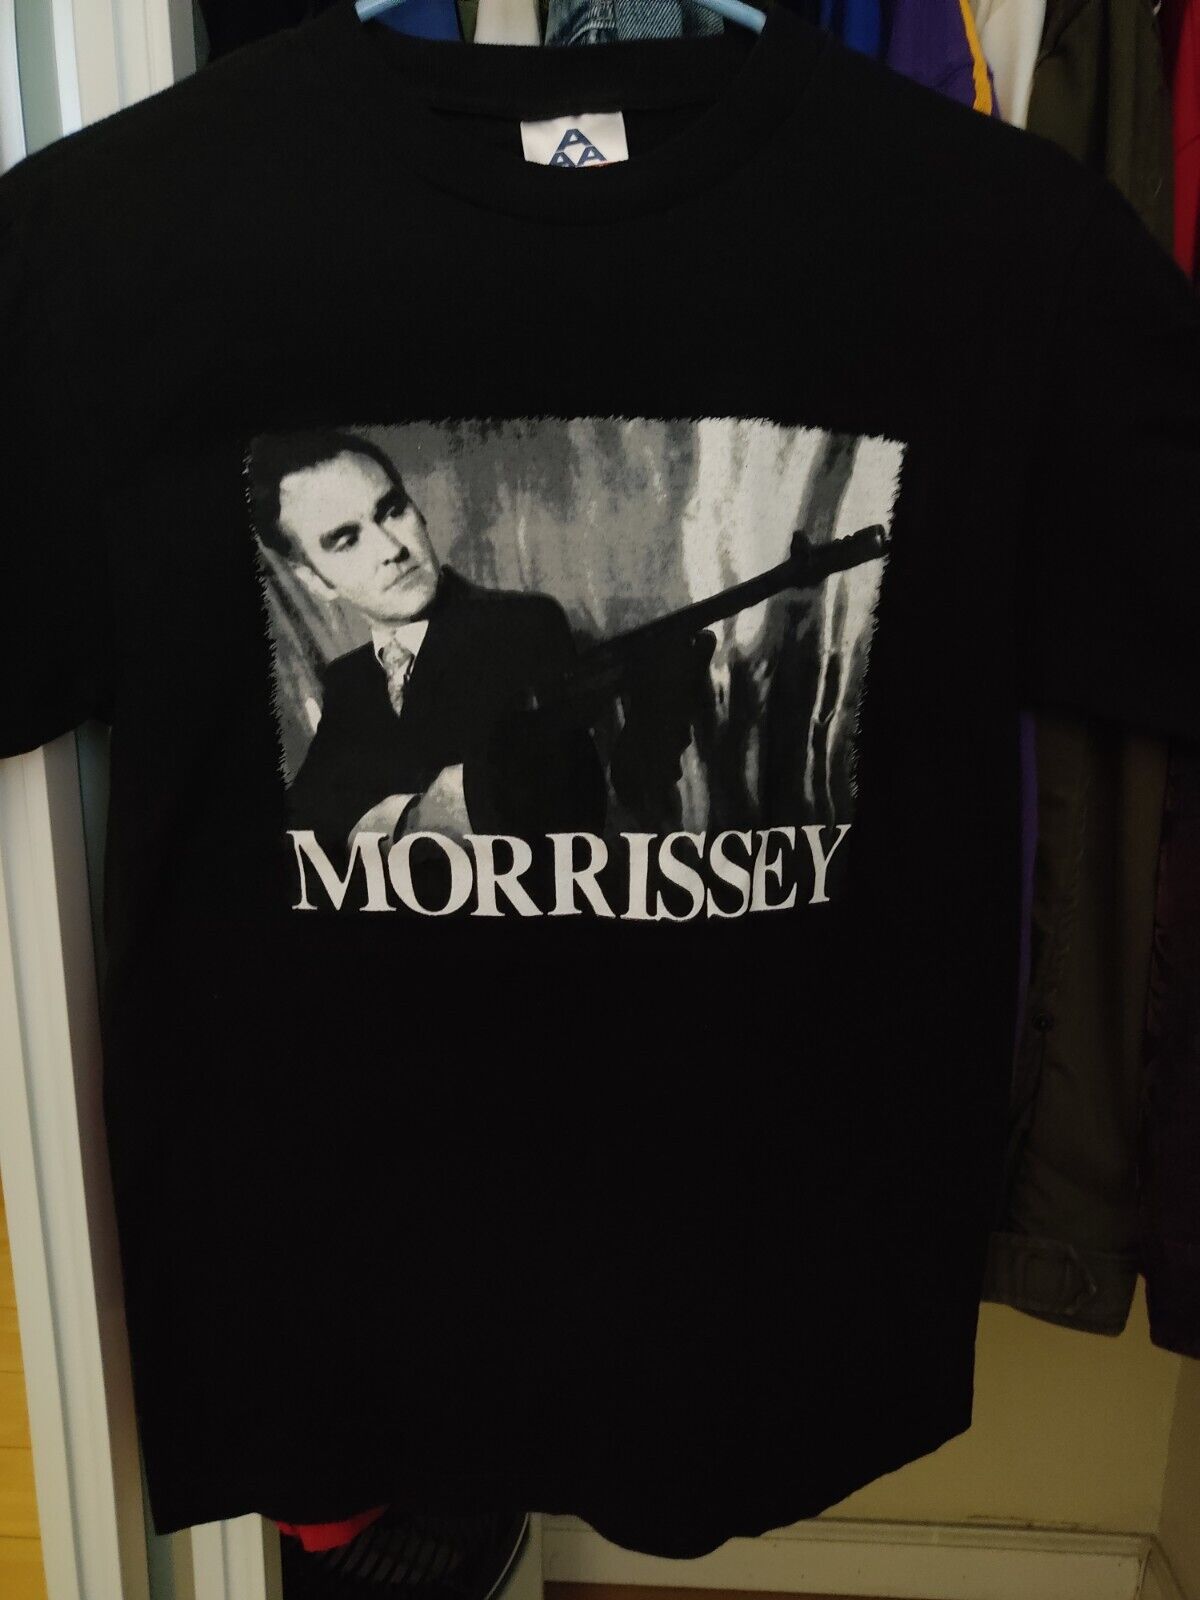 Morrissey Moz smiths pop You are the quarry 2004 World tour shirt small  rare new